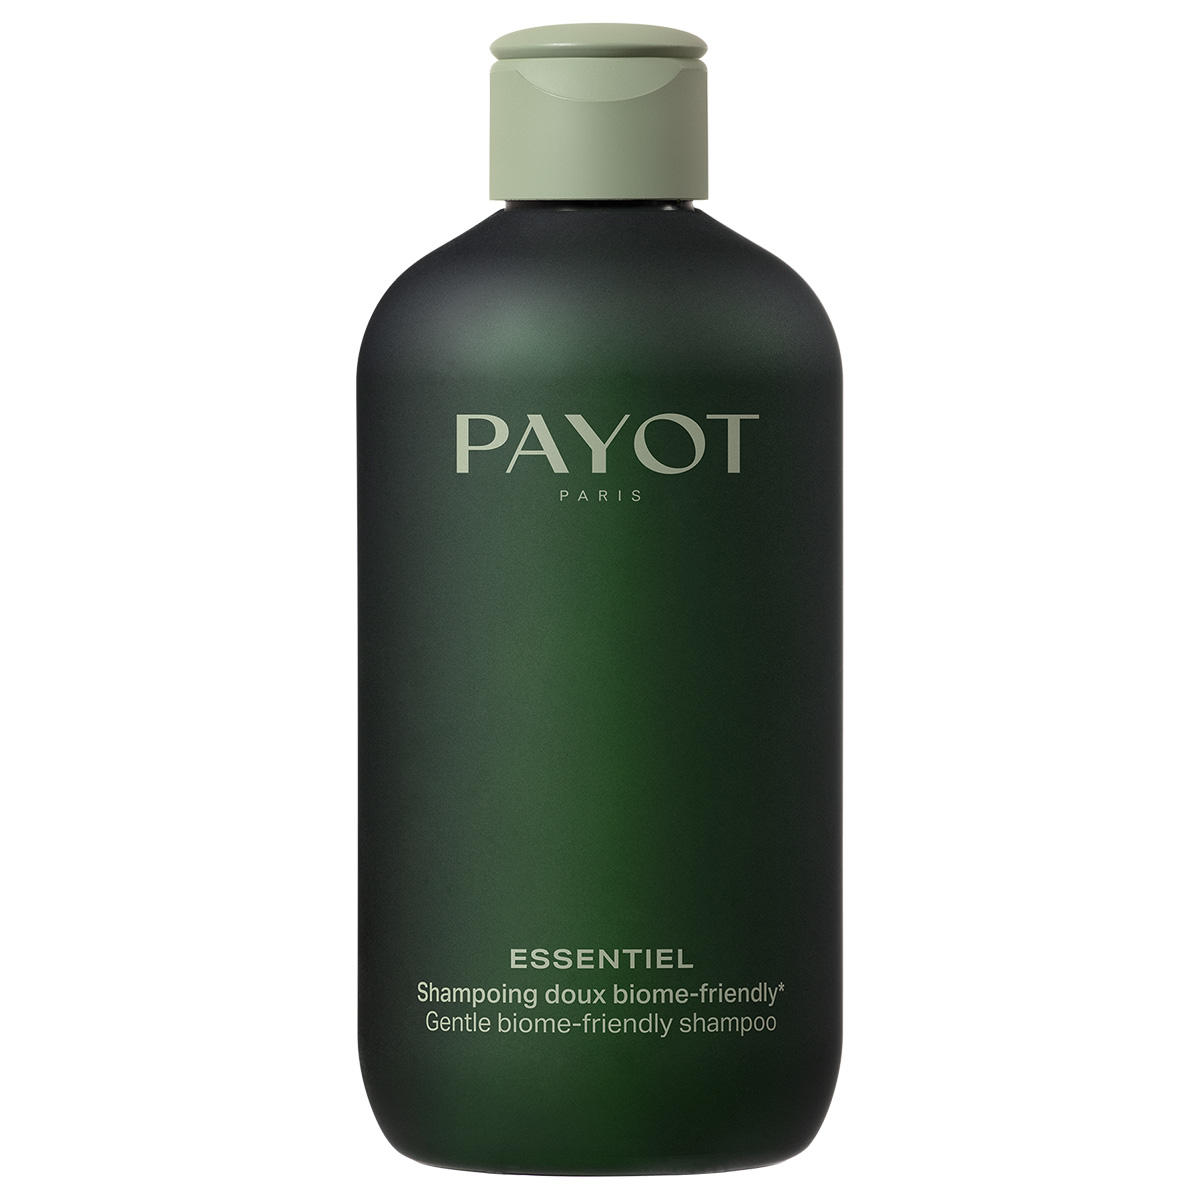 Payot Essentiel Shampoing doux biome-friendly 280 ml - 1